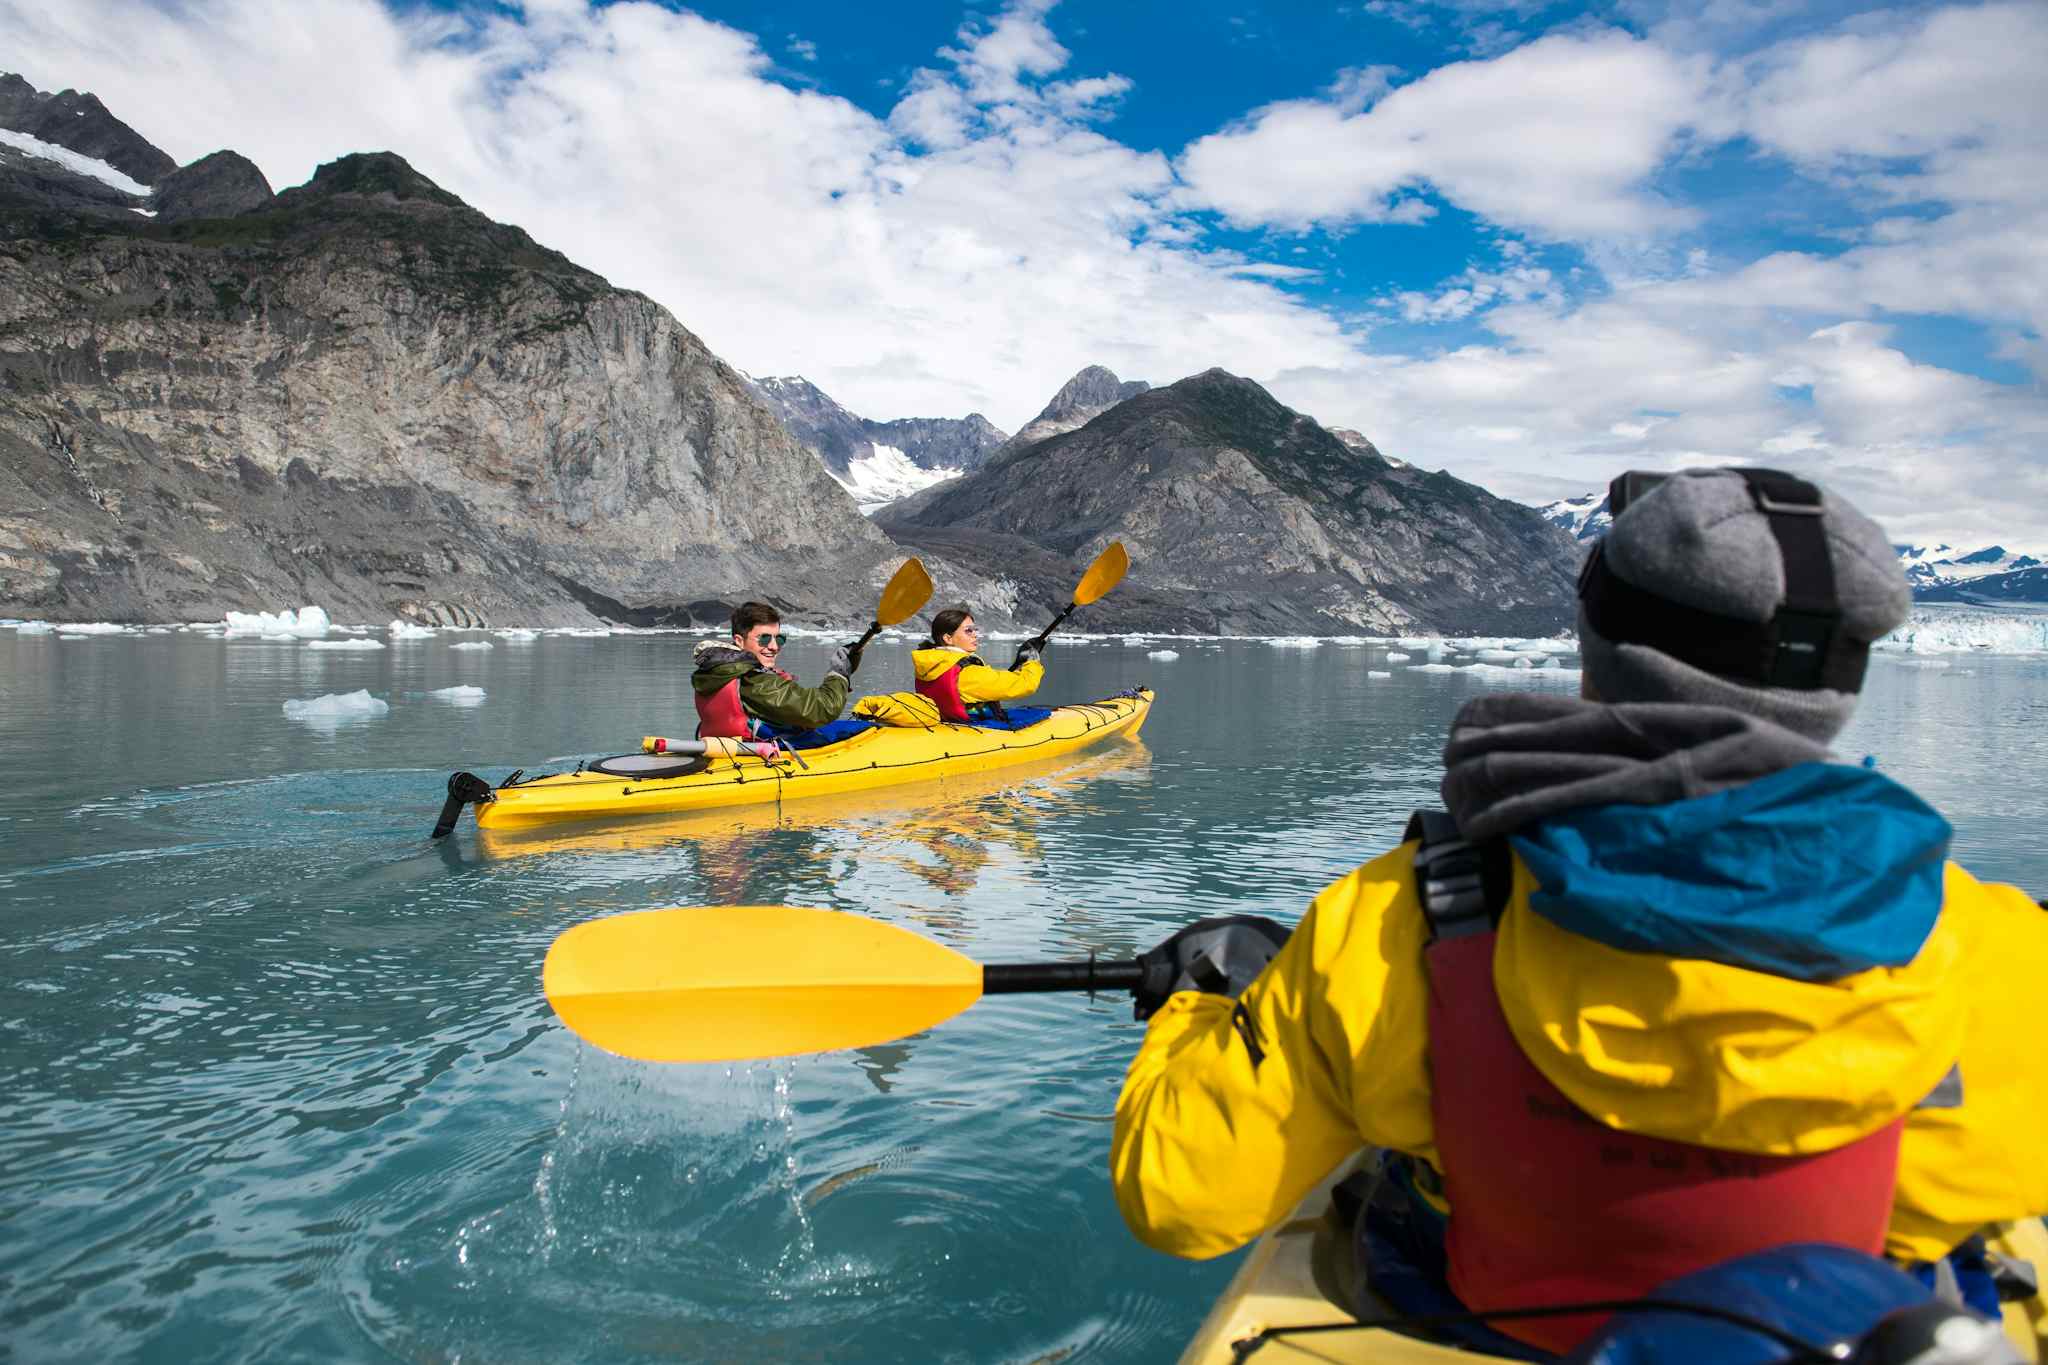 Kayaking to Shoup Glacier in Prince William Sound, Alaska
Shutterstock: 1919797409